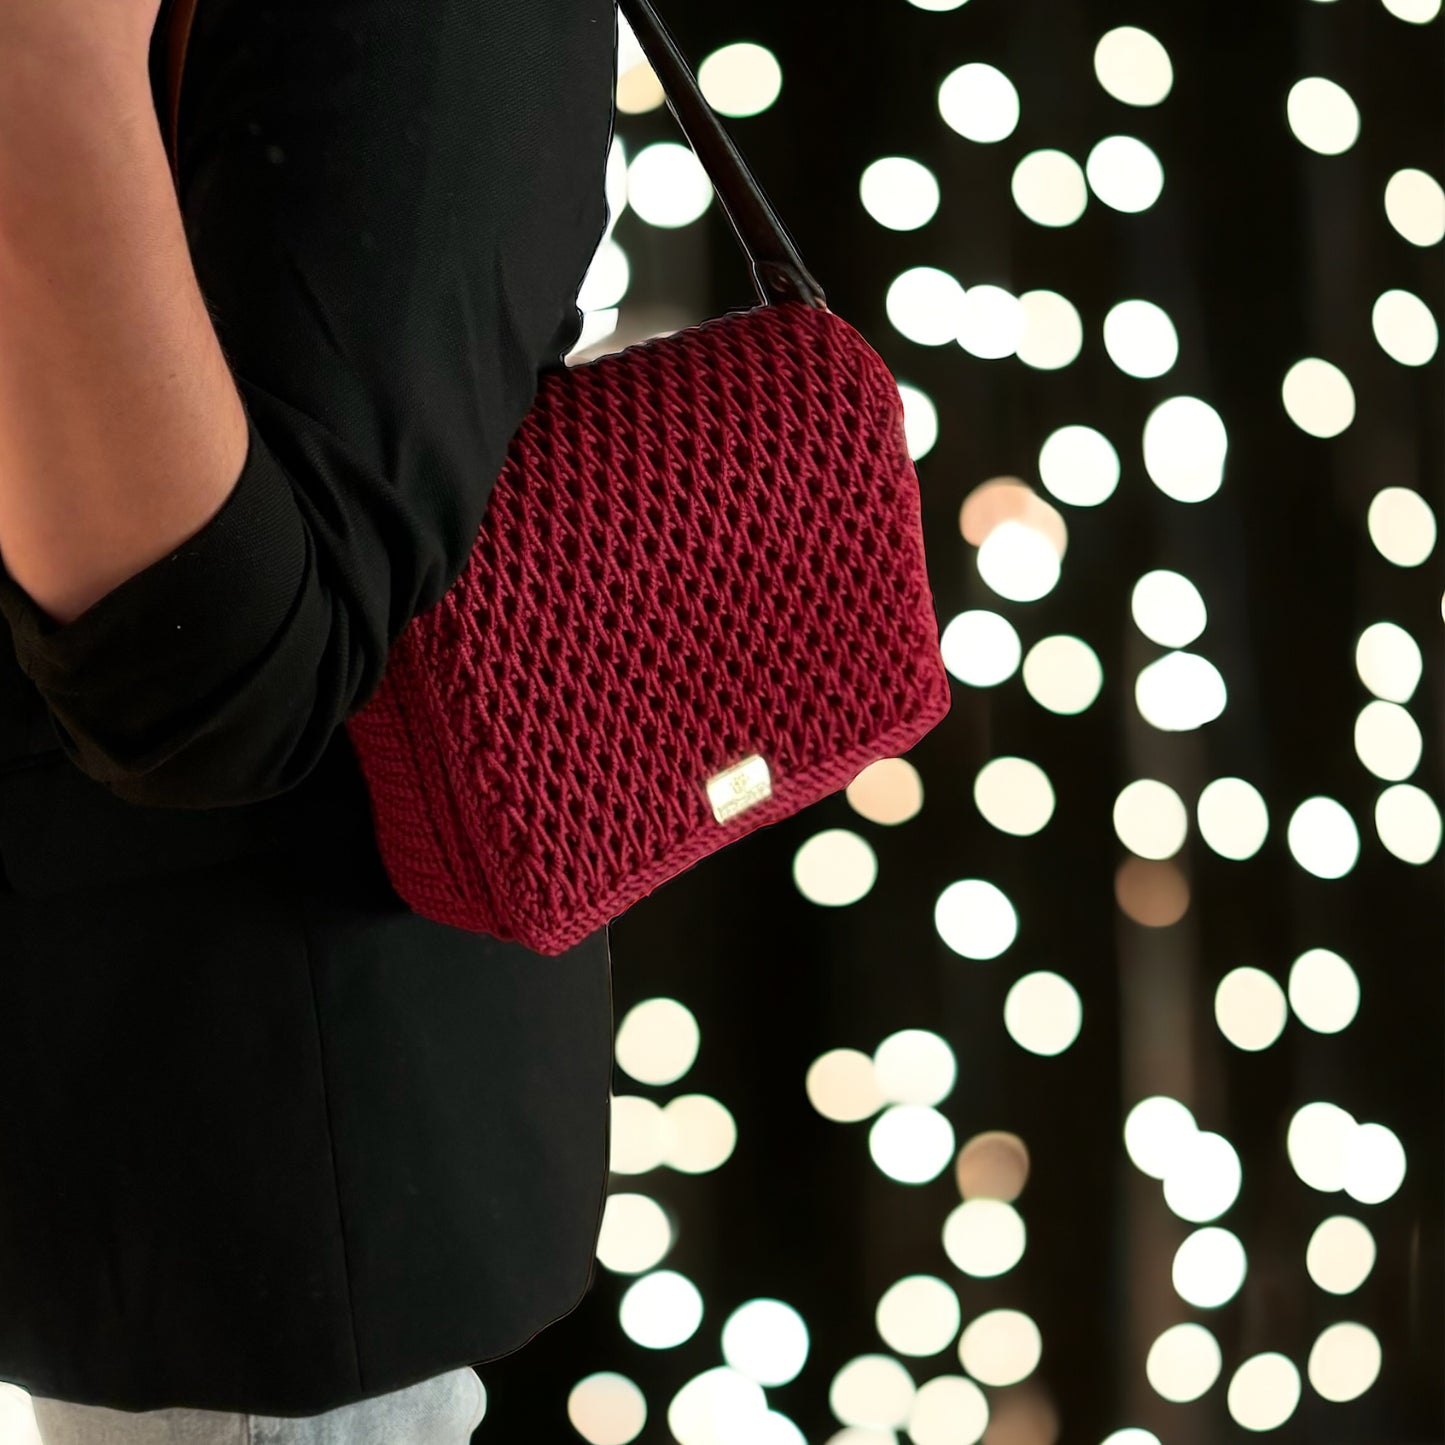 Glamorous burgundy shoulder handbag